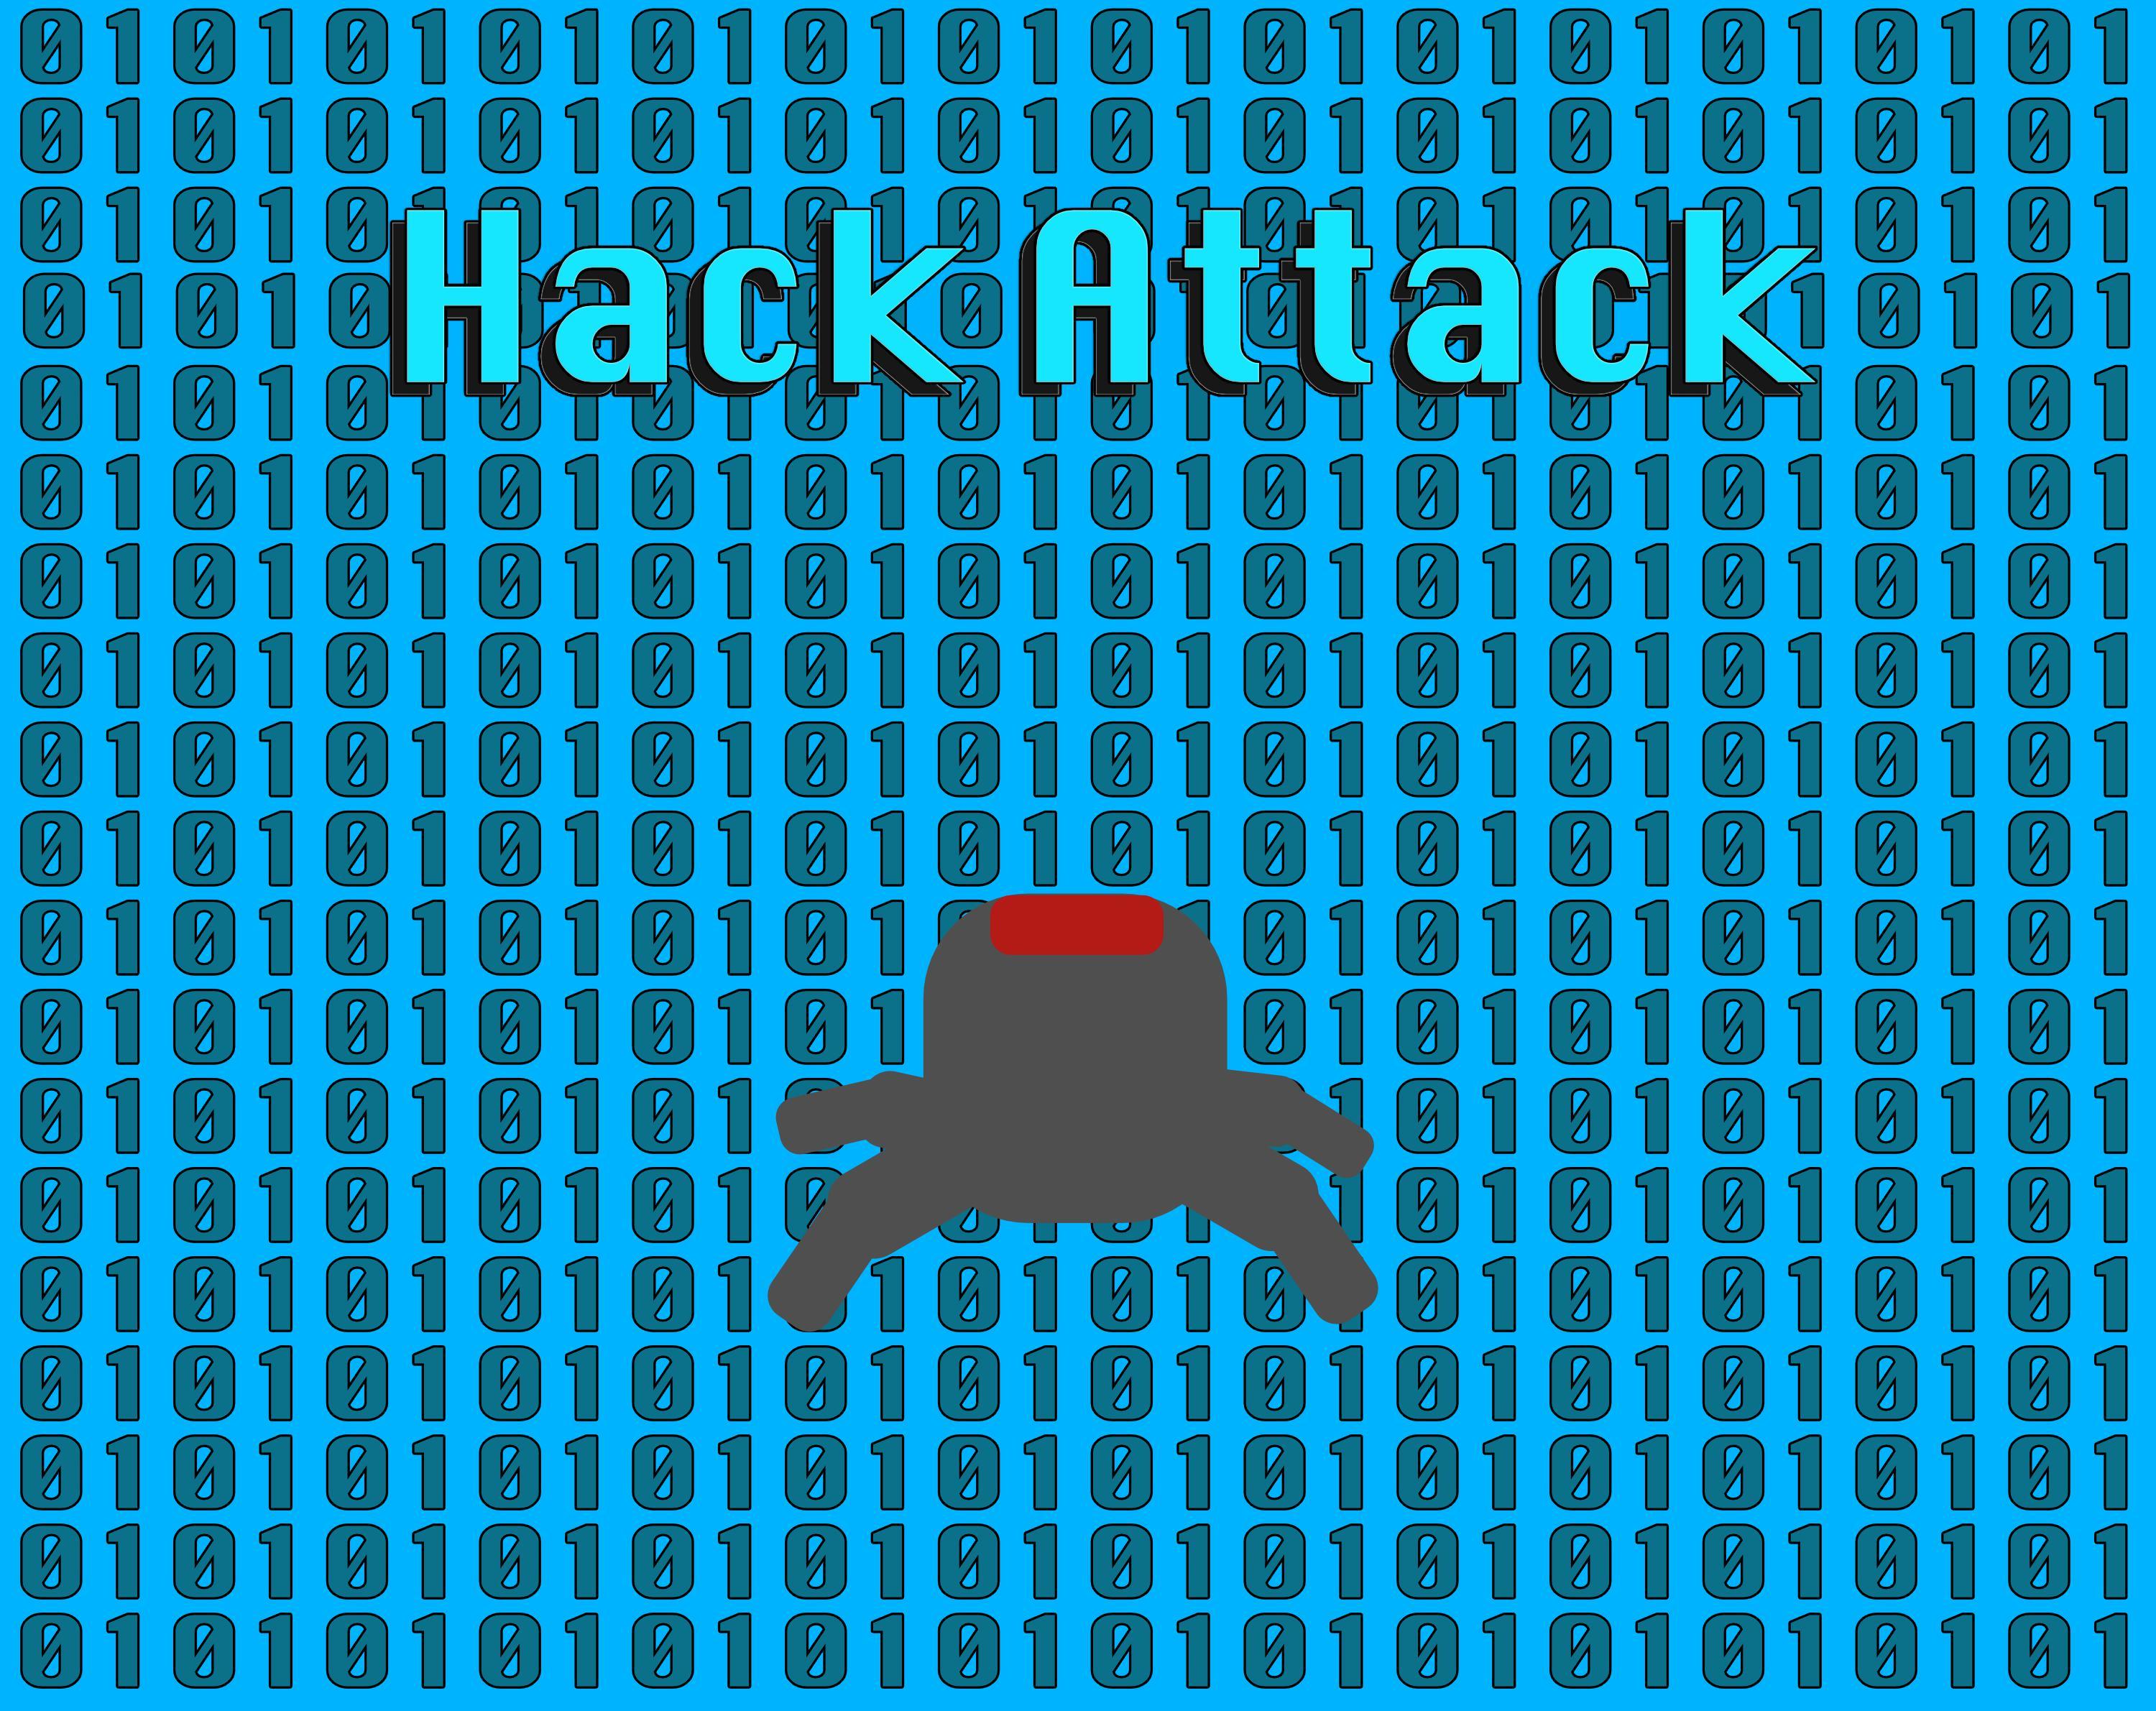 How Game Hacks Are Made - roblox updatedhacks.com